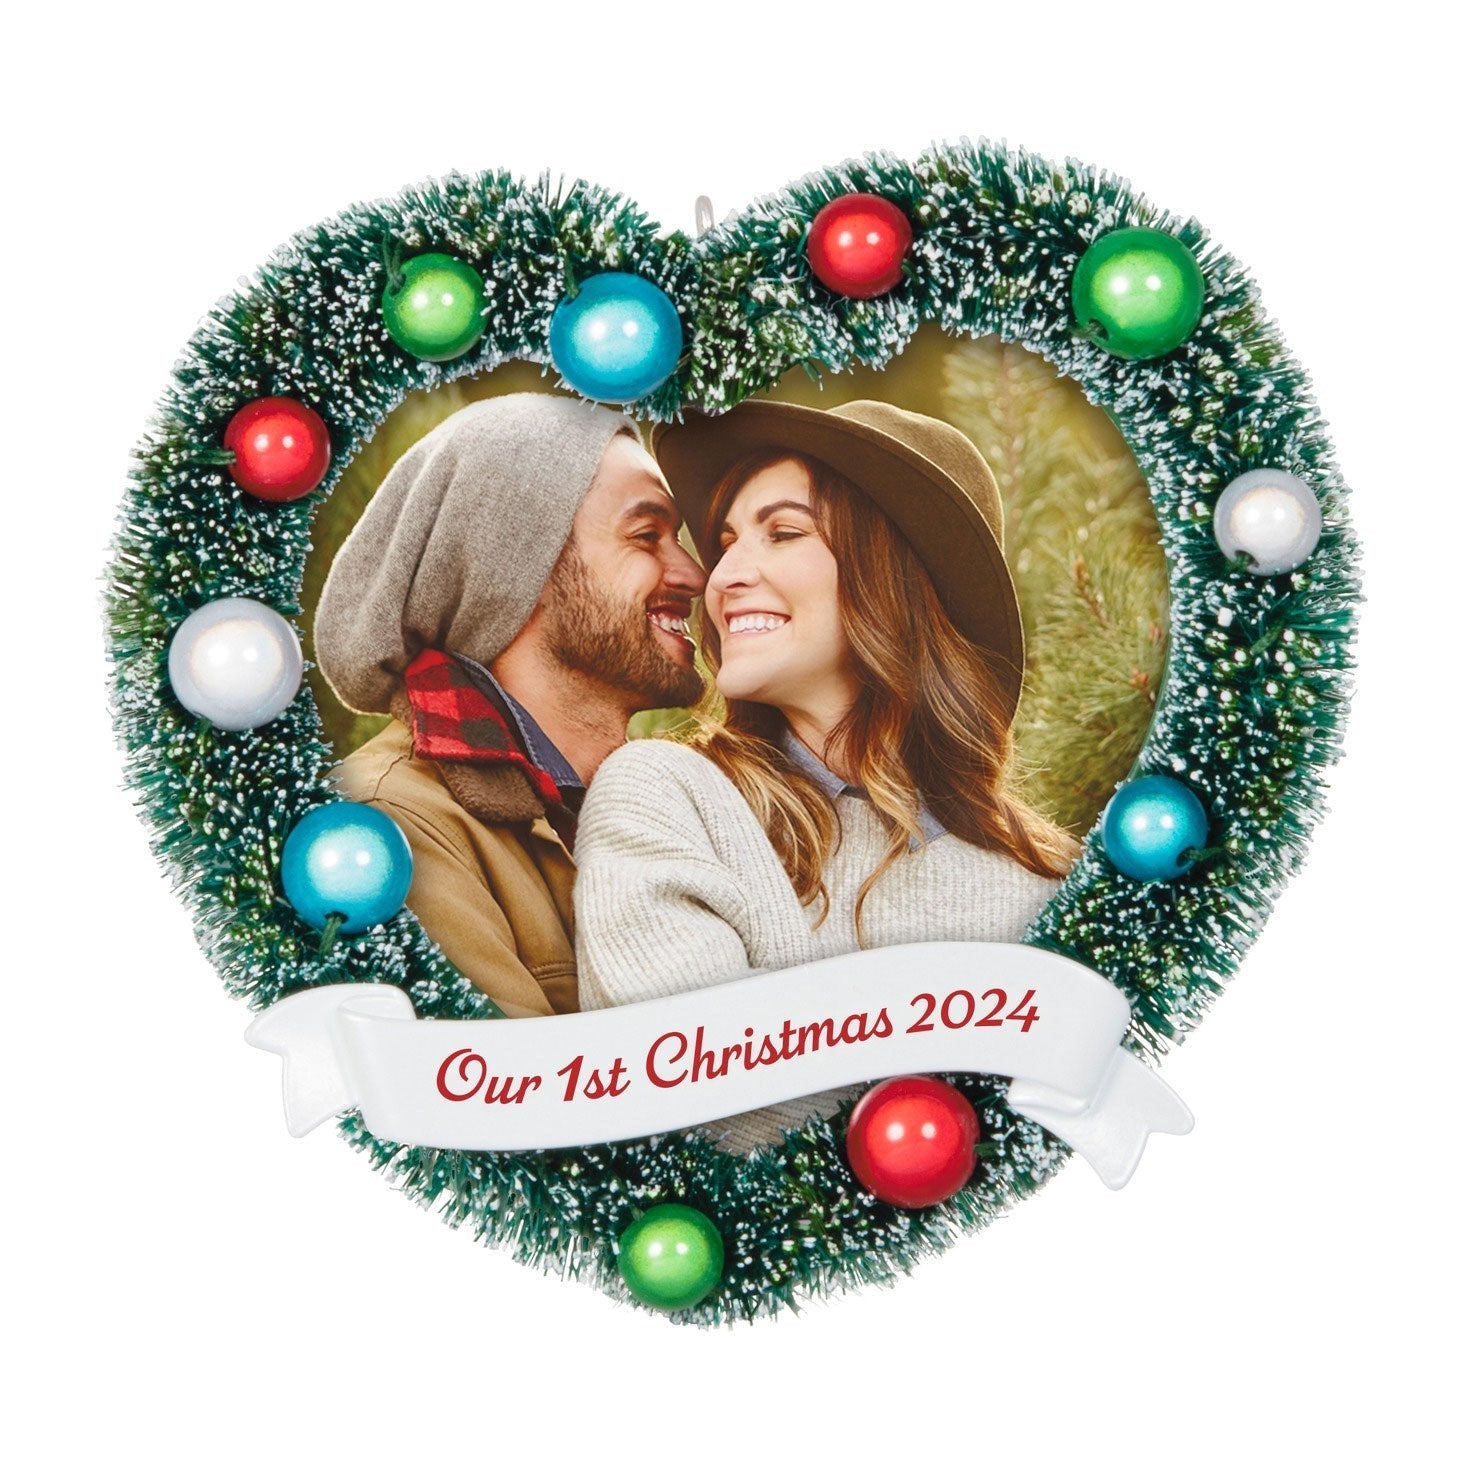 Our 1st Christmas 2024 Photo Frame Keepsake Ornament